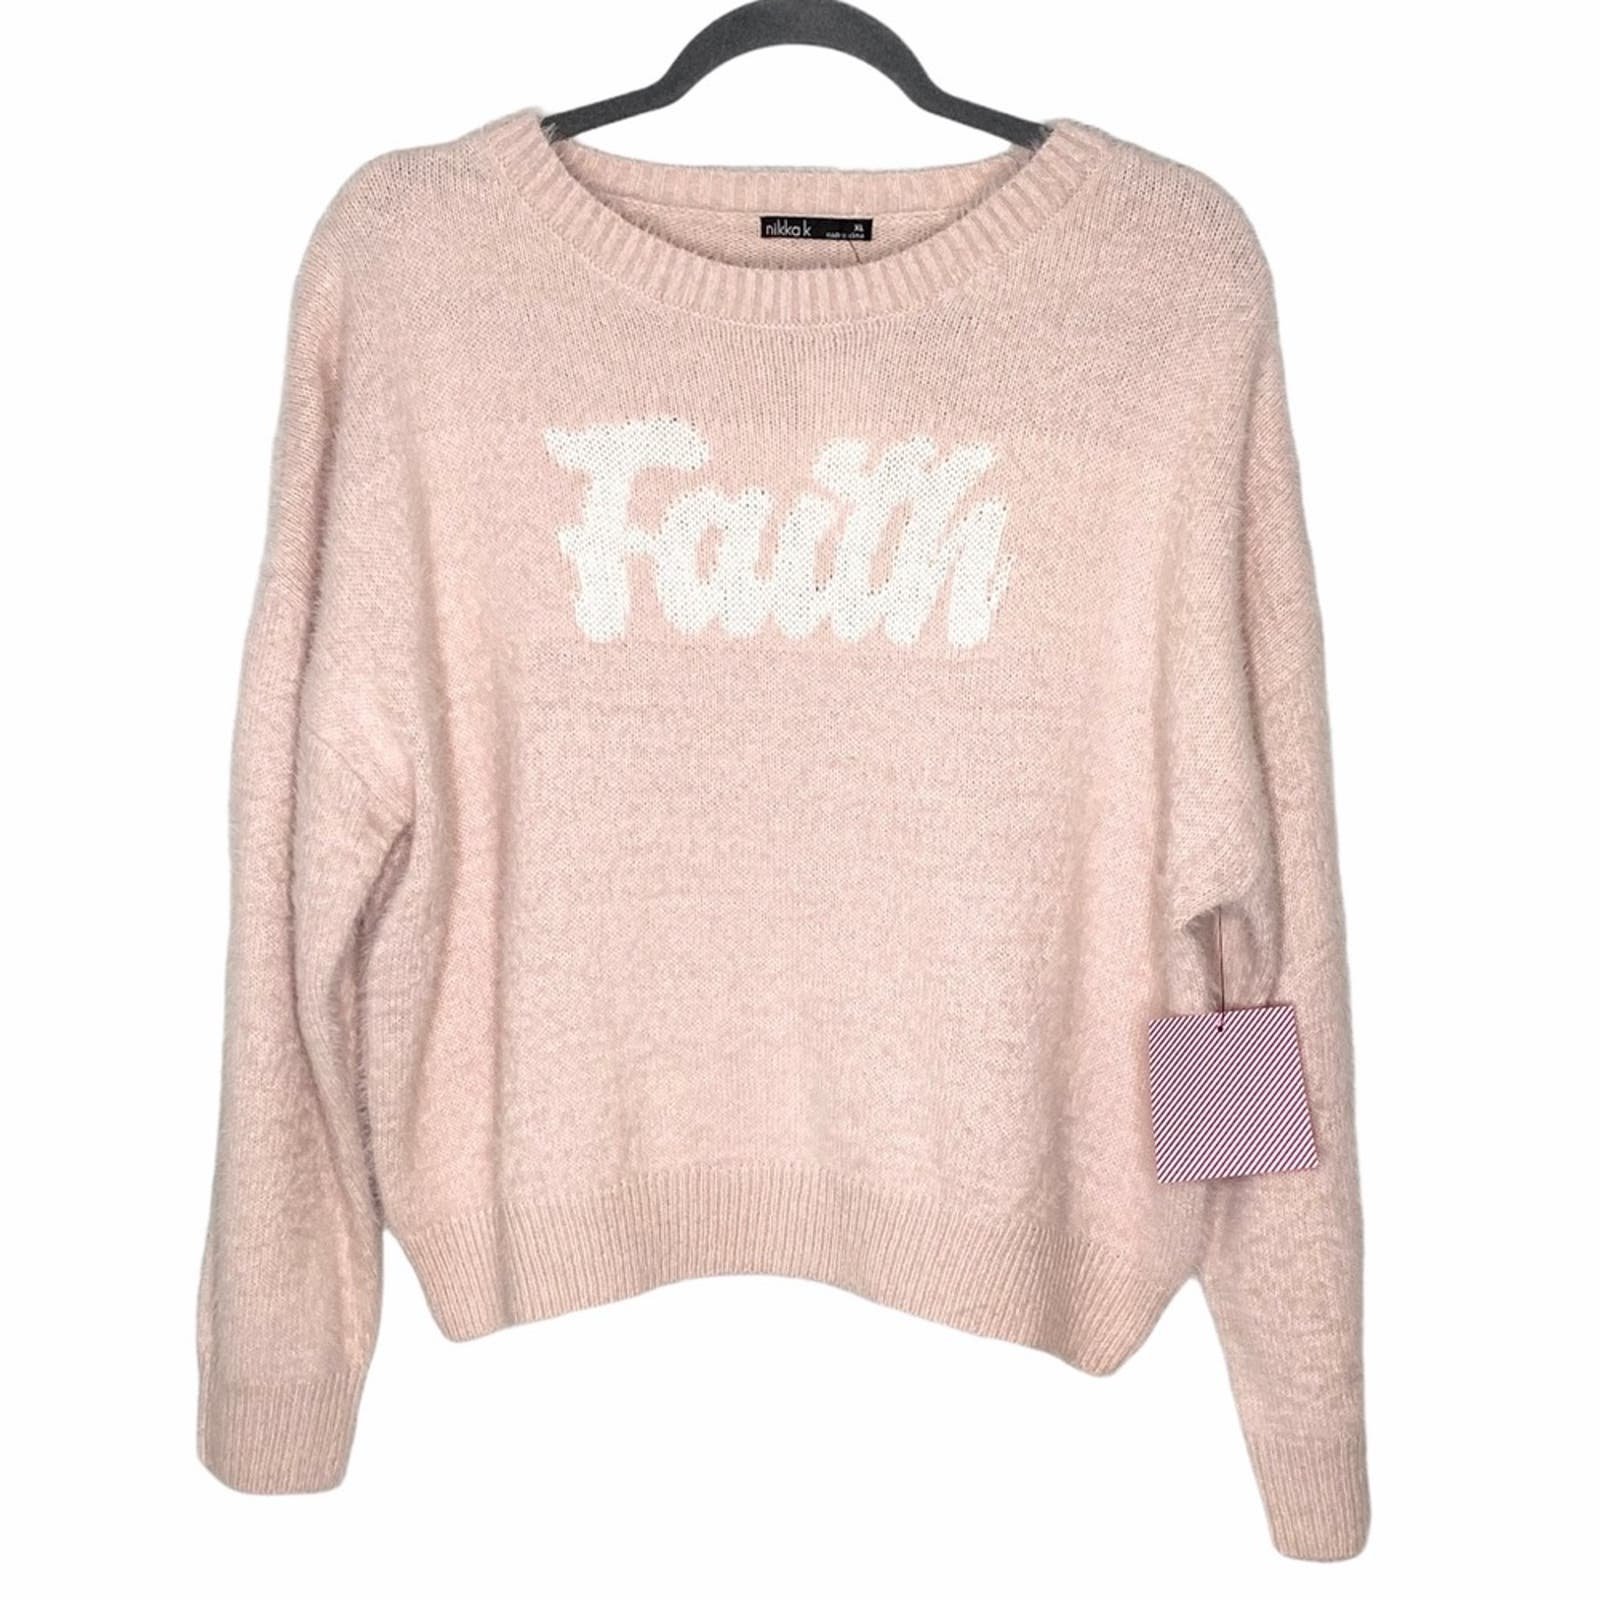 Affordable Women´s NWT Nikka k “faith” fuzzy blush pink cozy soft sweater size XL hnRHk4PdJ best sale